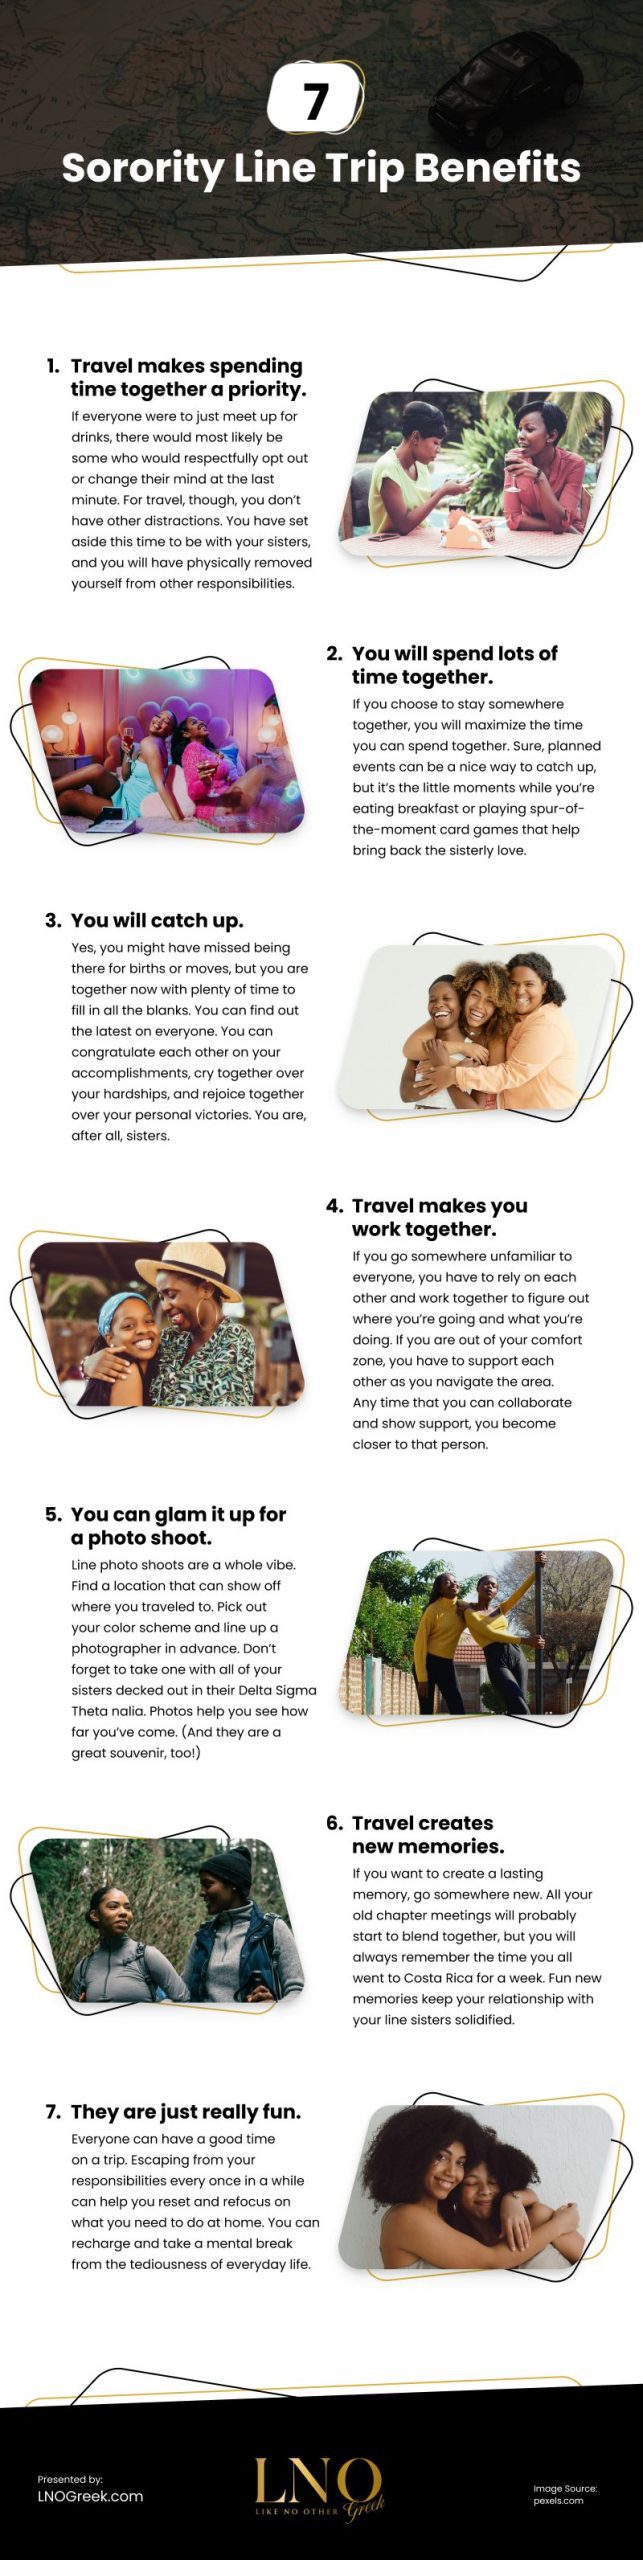 7 Sorority Line Trip Benefits Infographic